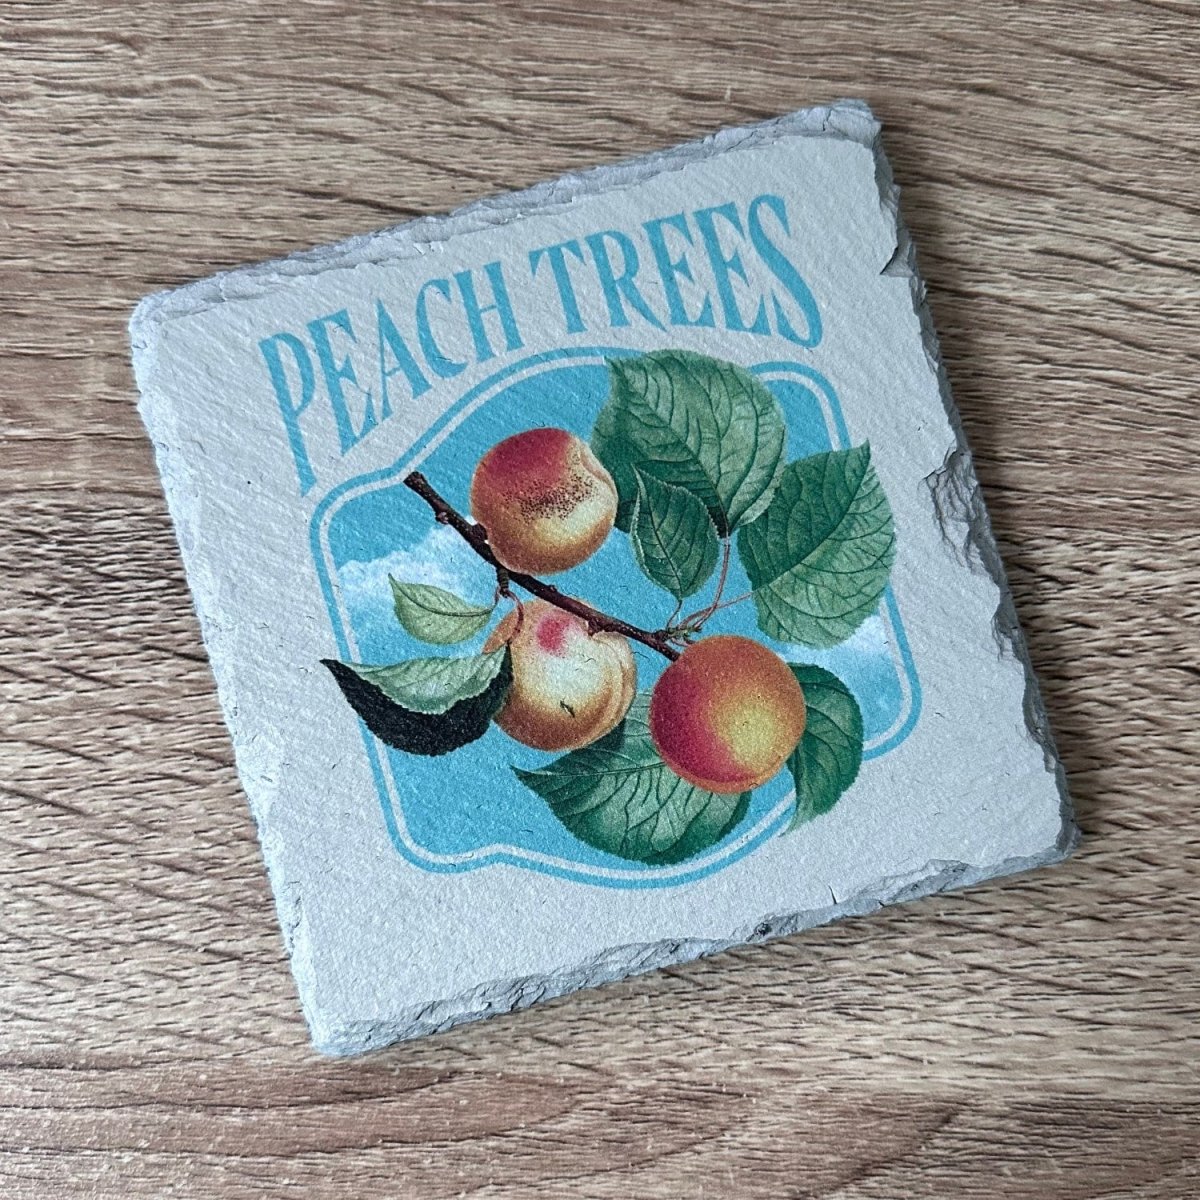 Vintage Fruit Slate Coasters - Peach Trees - GameOn.games